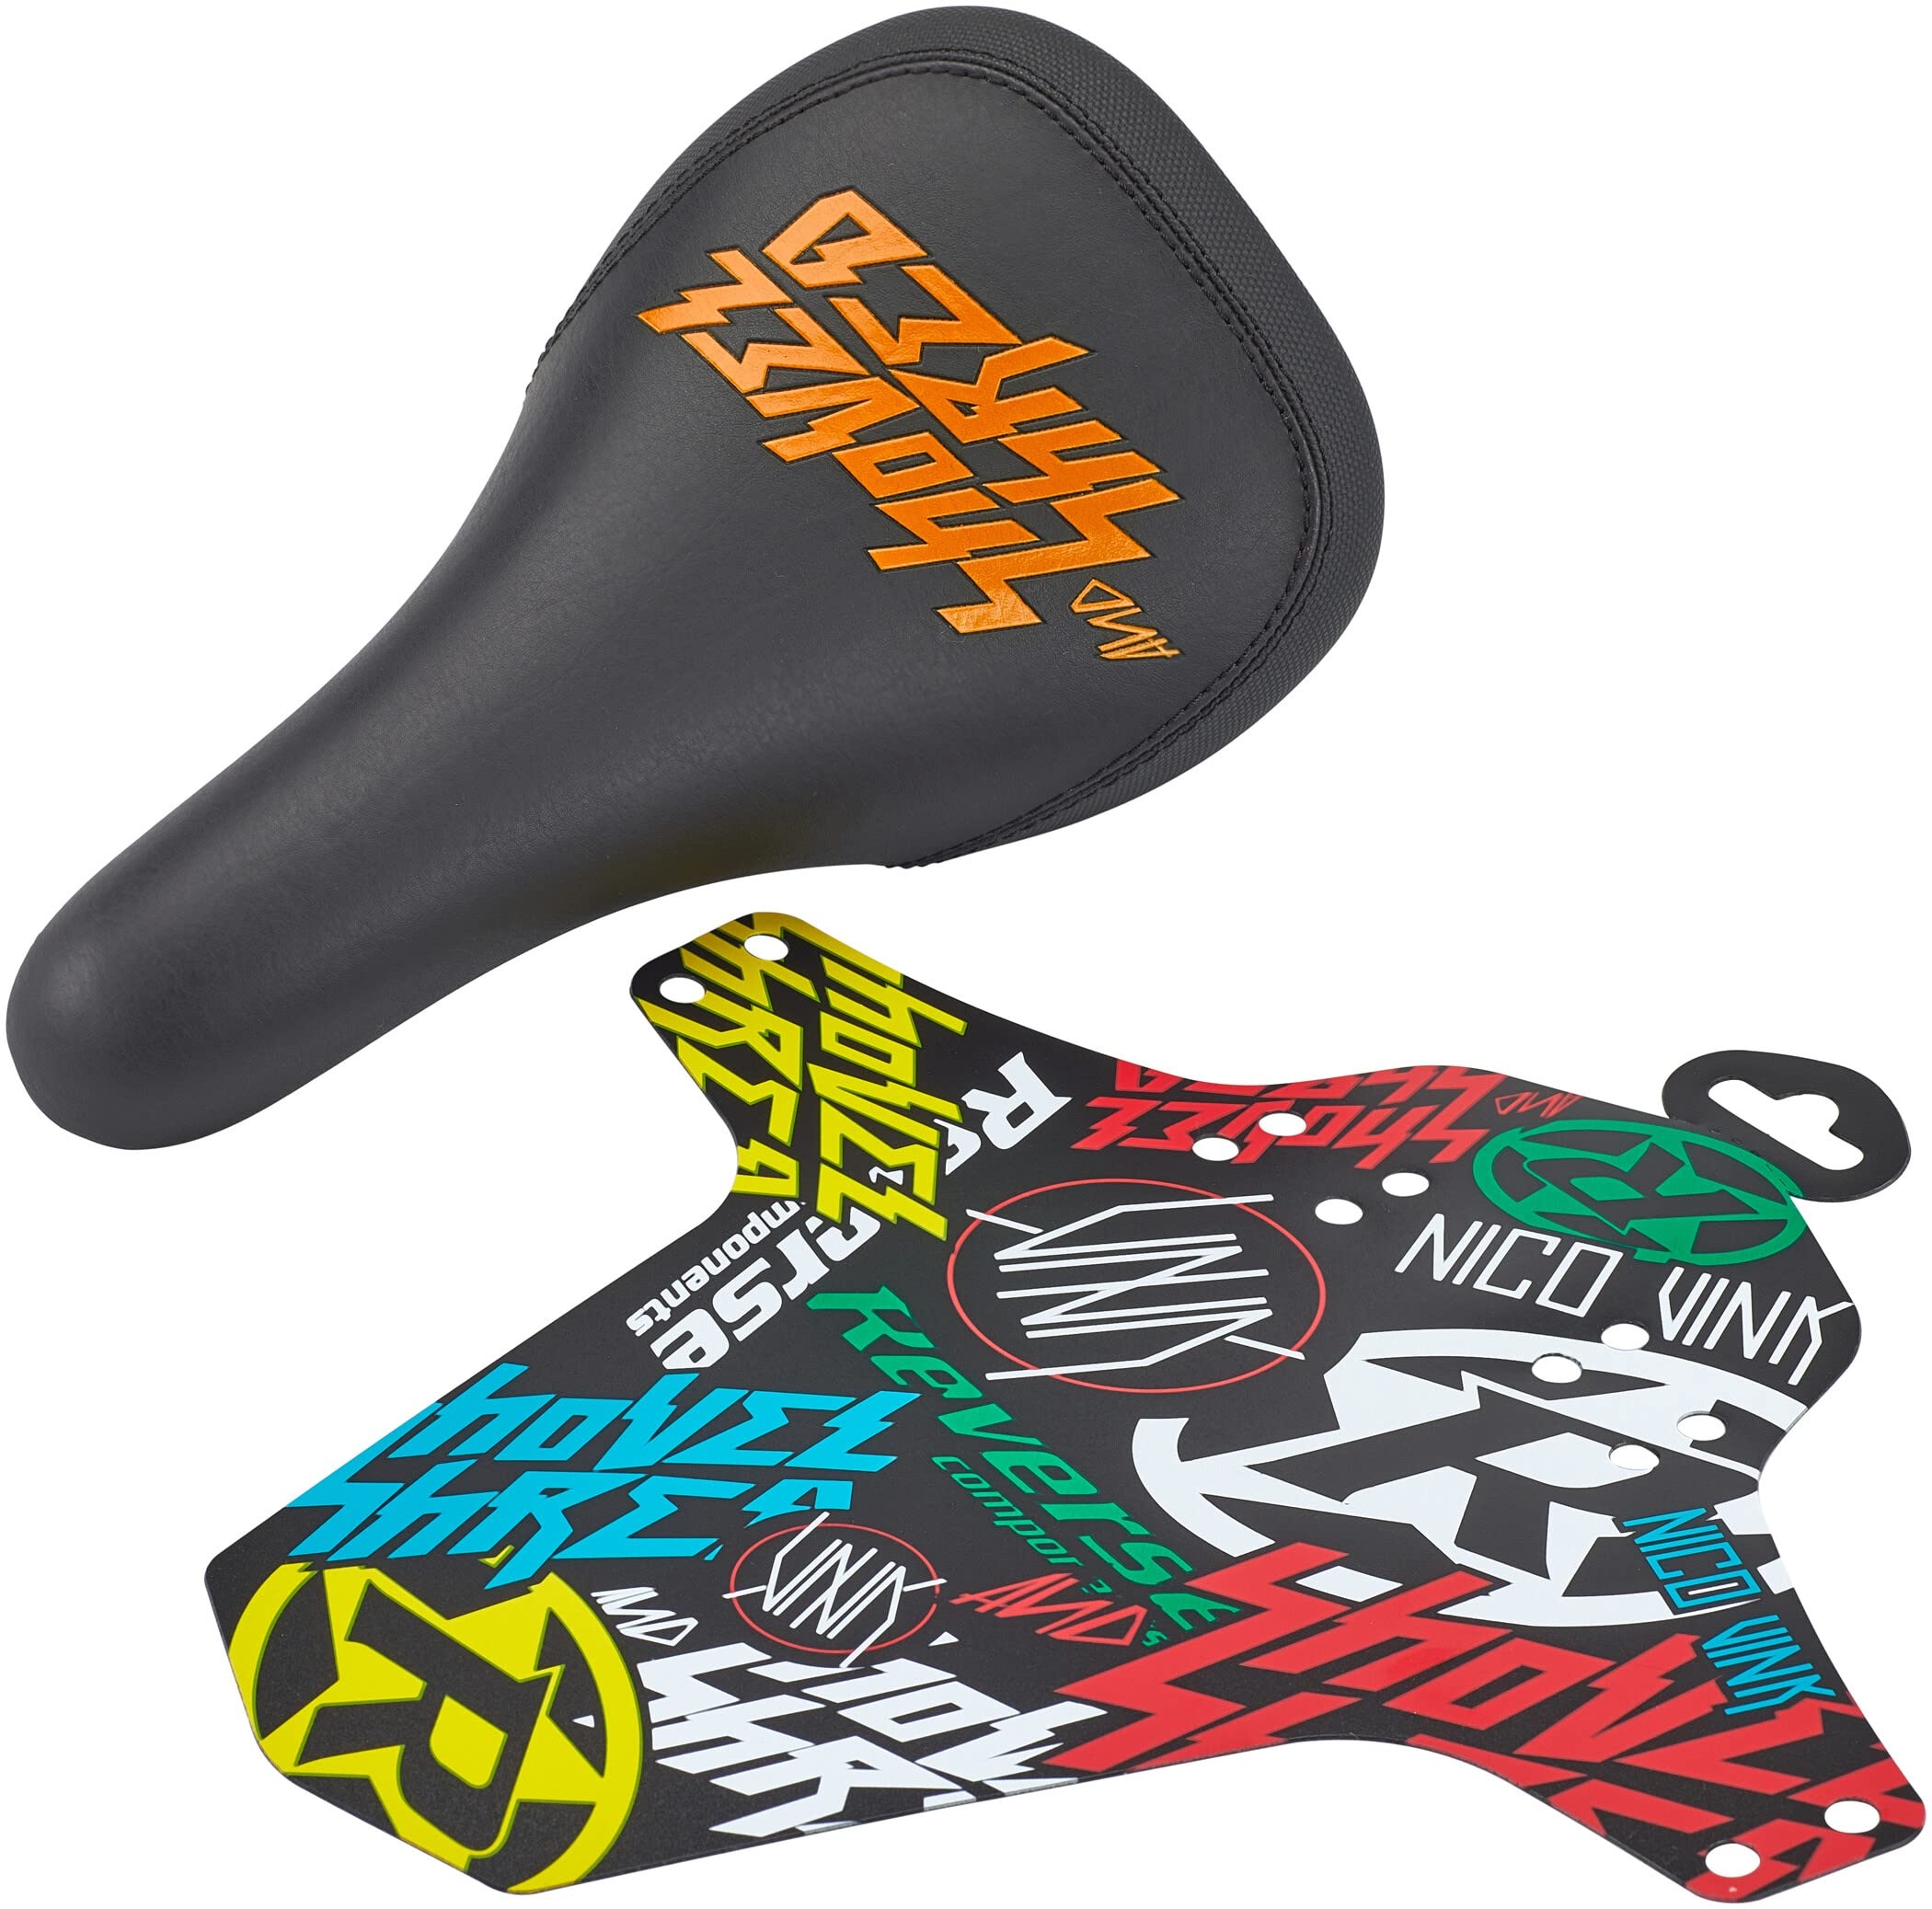 Reverse Nico Vink Shovel & Shred MTB FR Downhill Fahrrad Sattel schwarz/orange